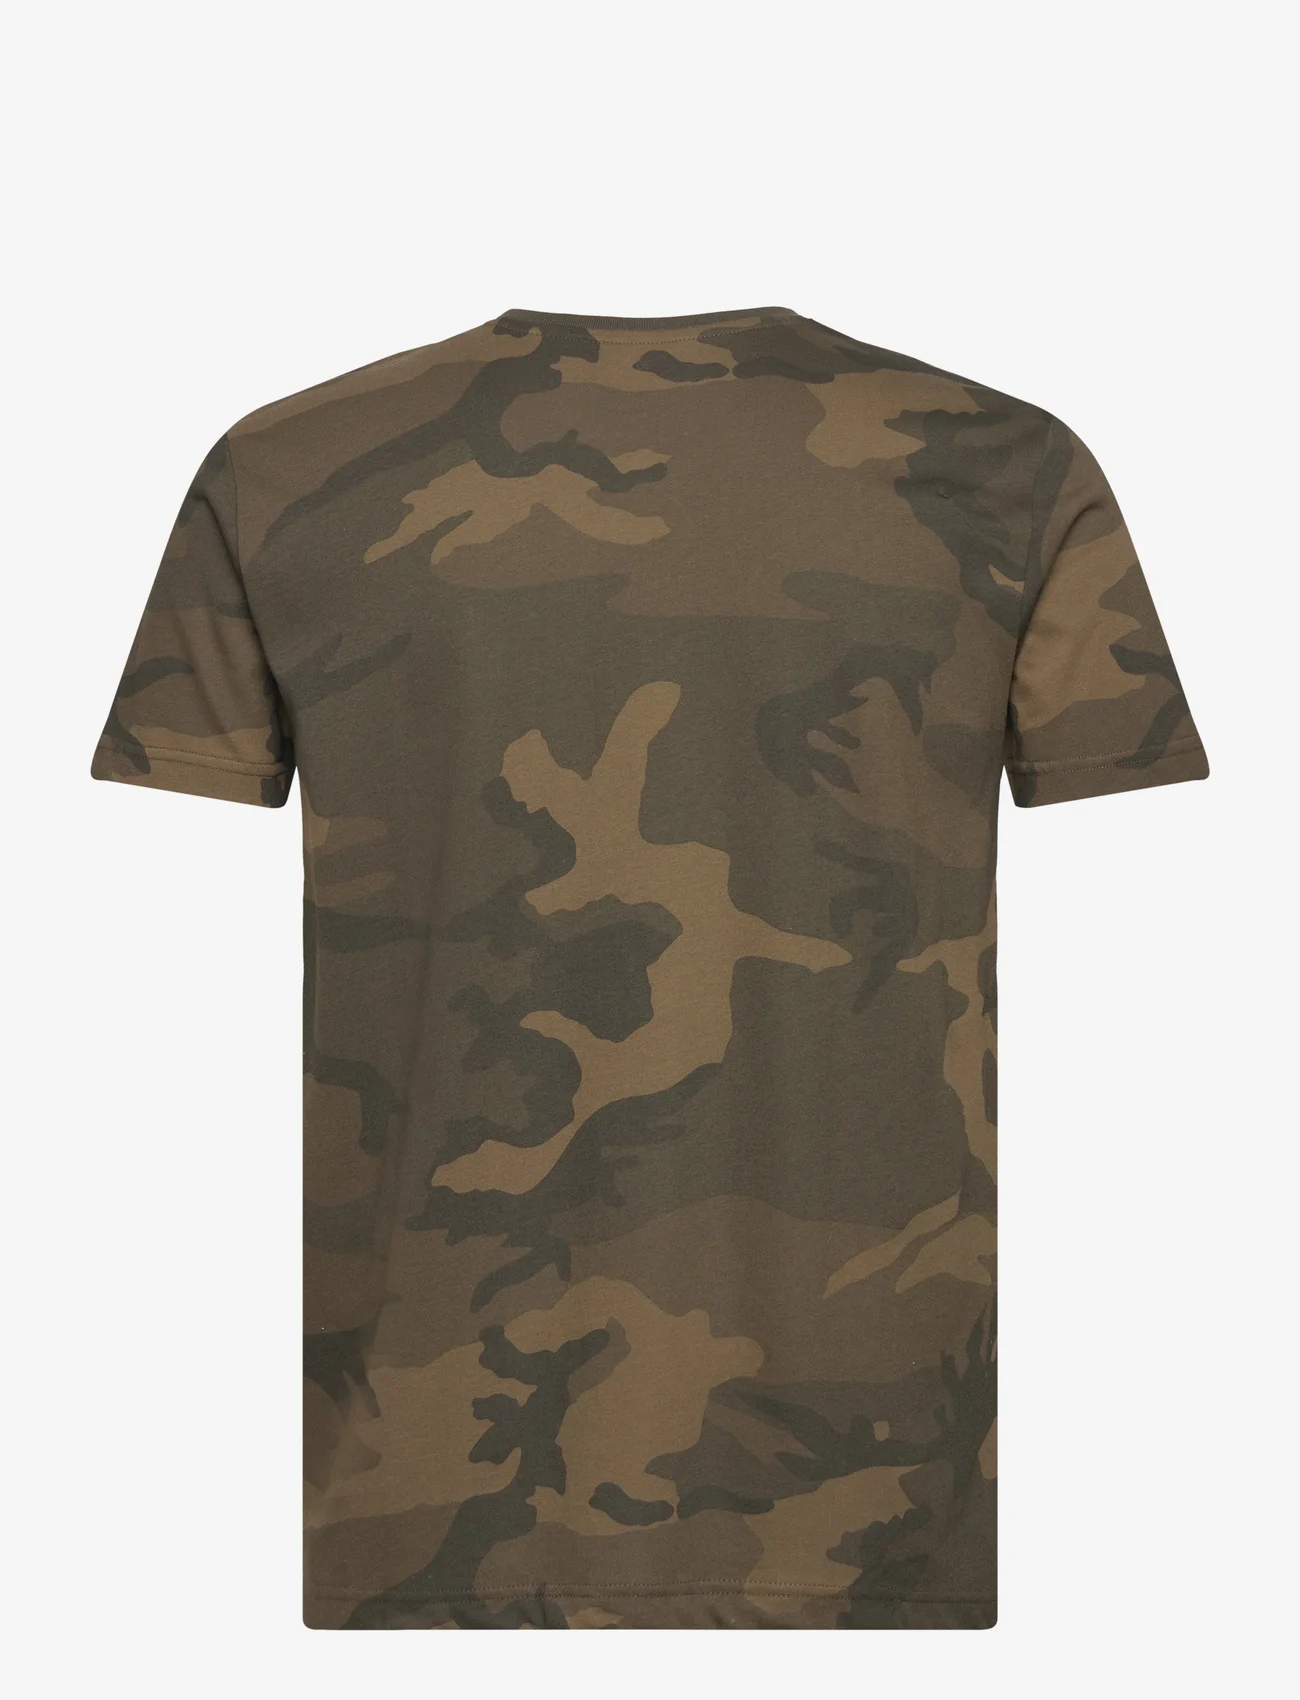 Alpha Industries - Basic T-Shirt Camo - kortärmade t-shirts - olive camo - 1